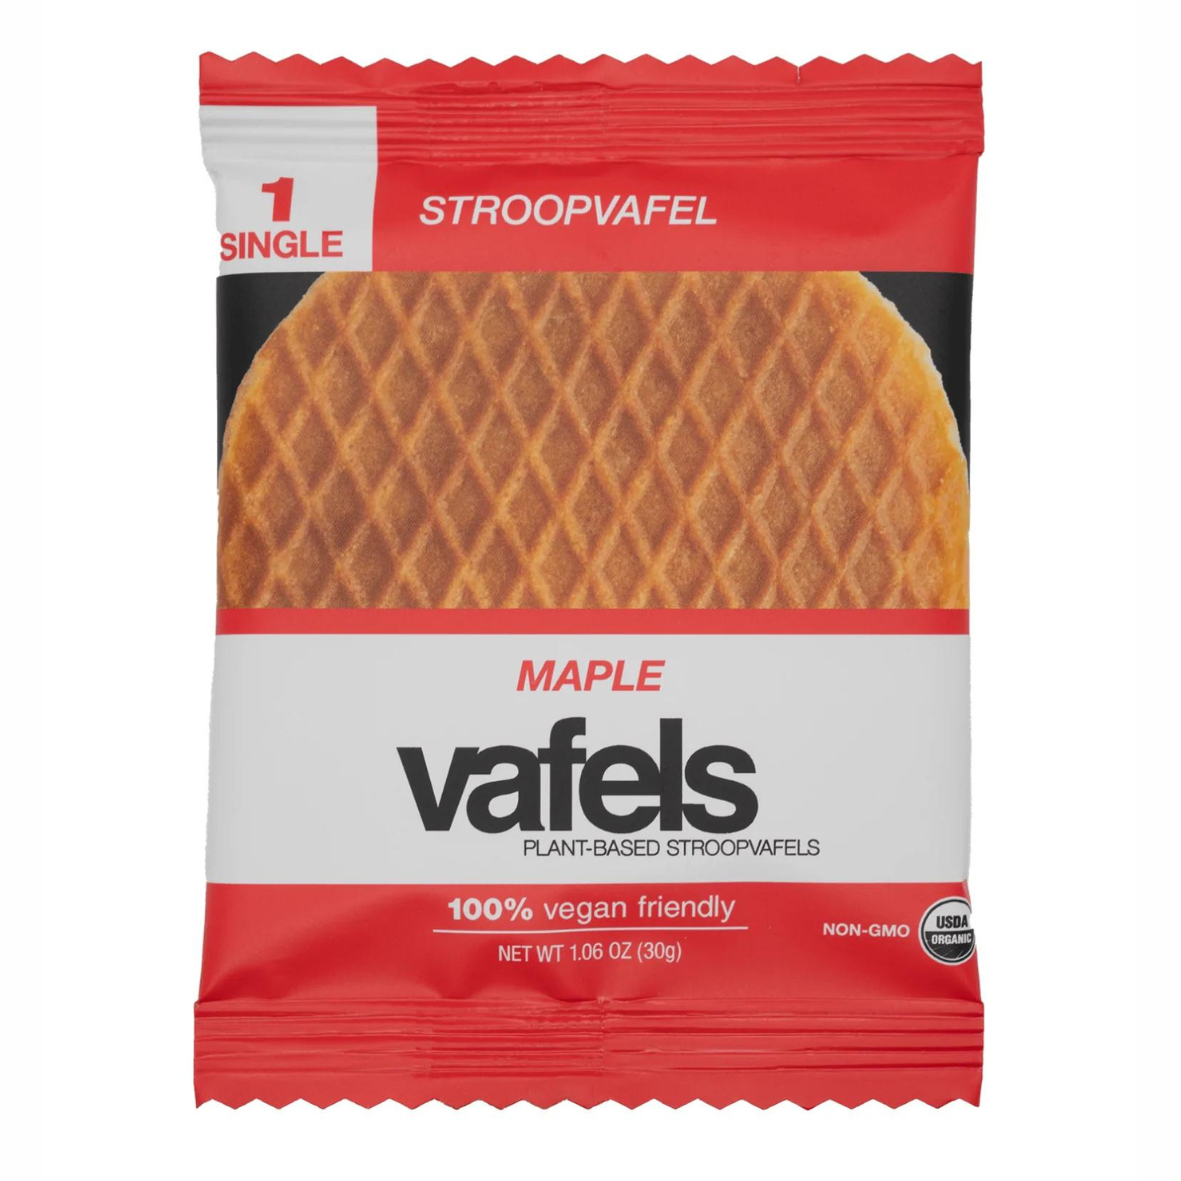 Vafels - Stroopvafel - Maple (30g)